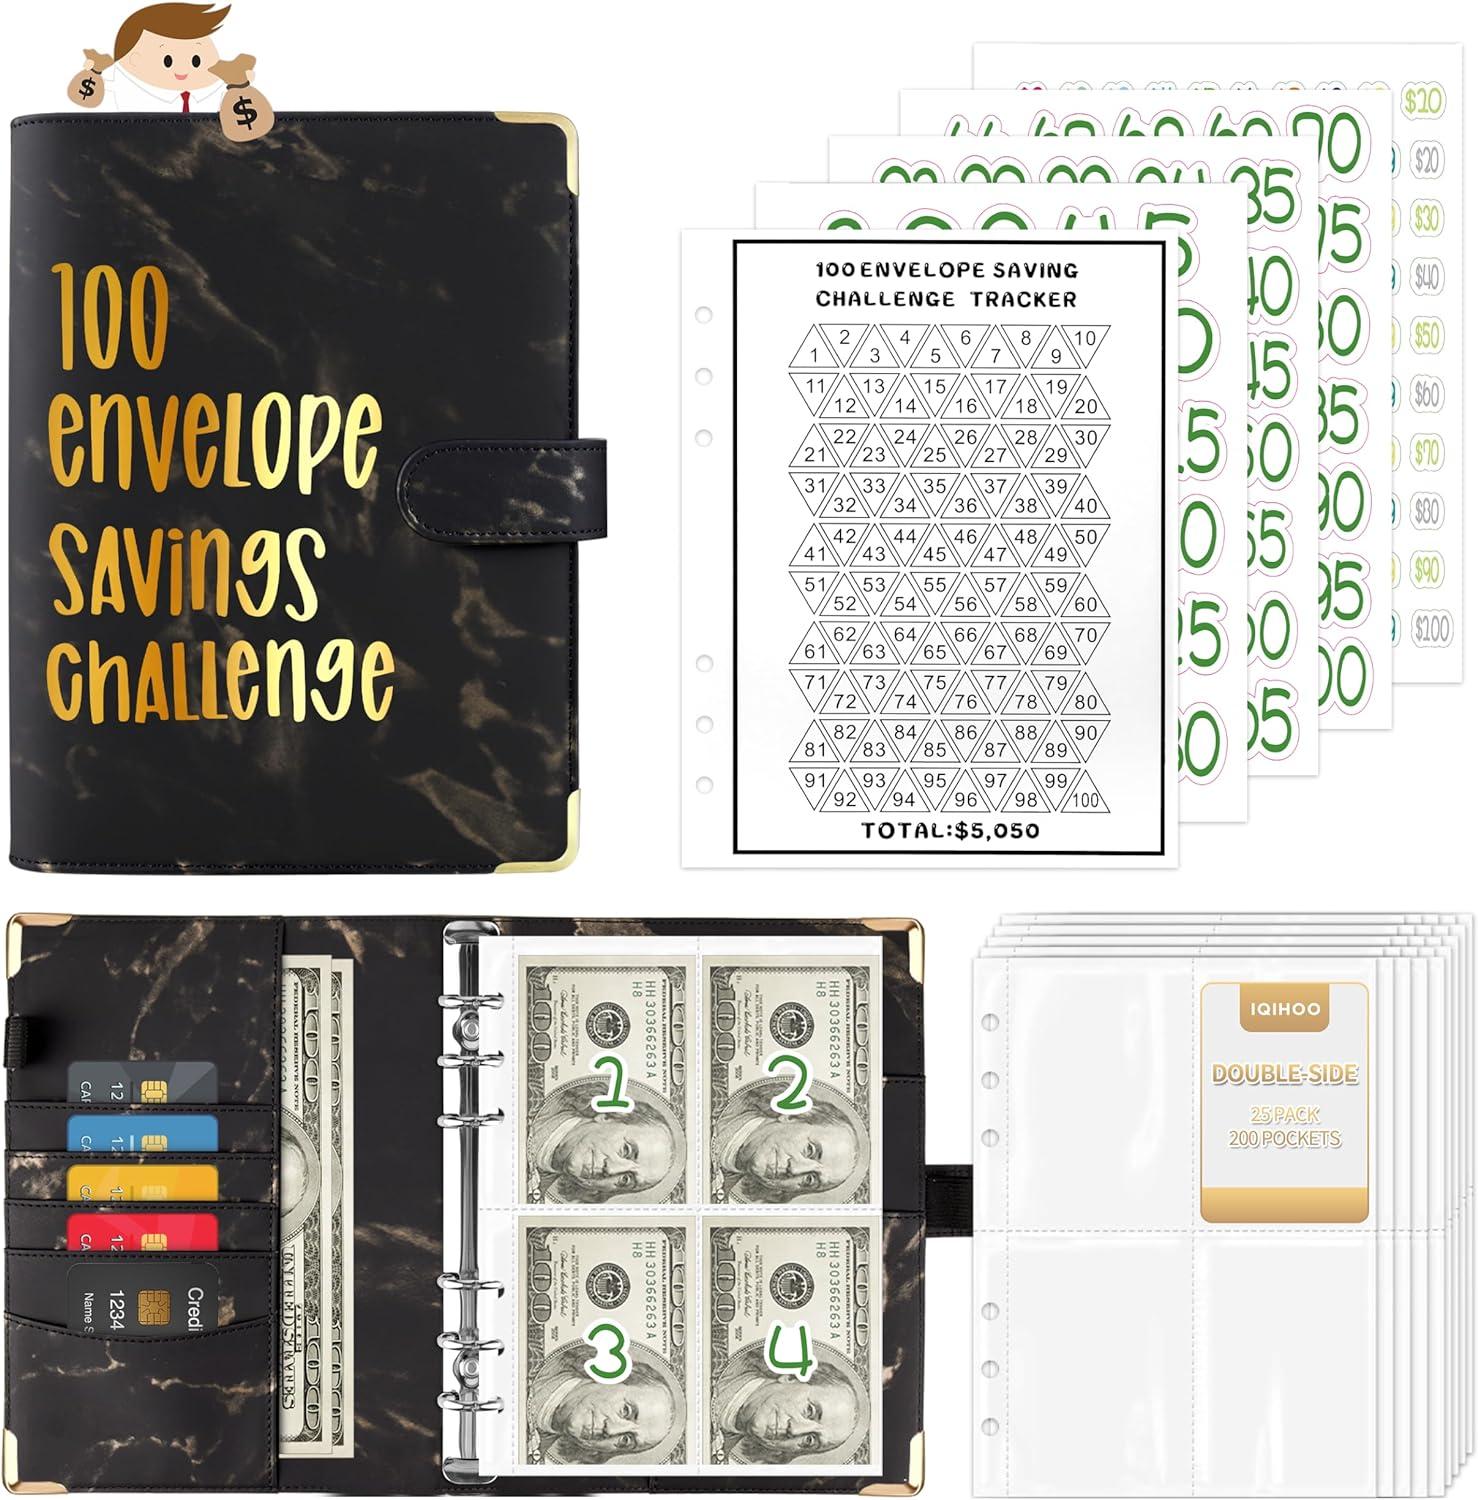 iqihoo 100 envelope savings challenge binder money saving challenge binder 100 day savings challenge binder 